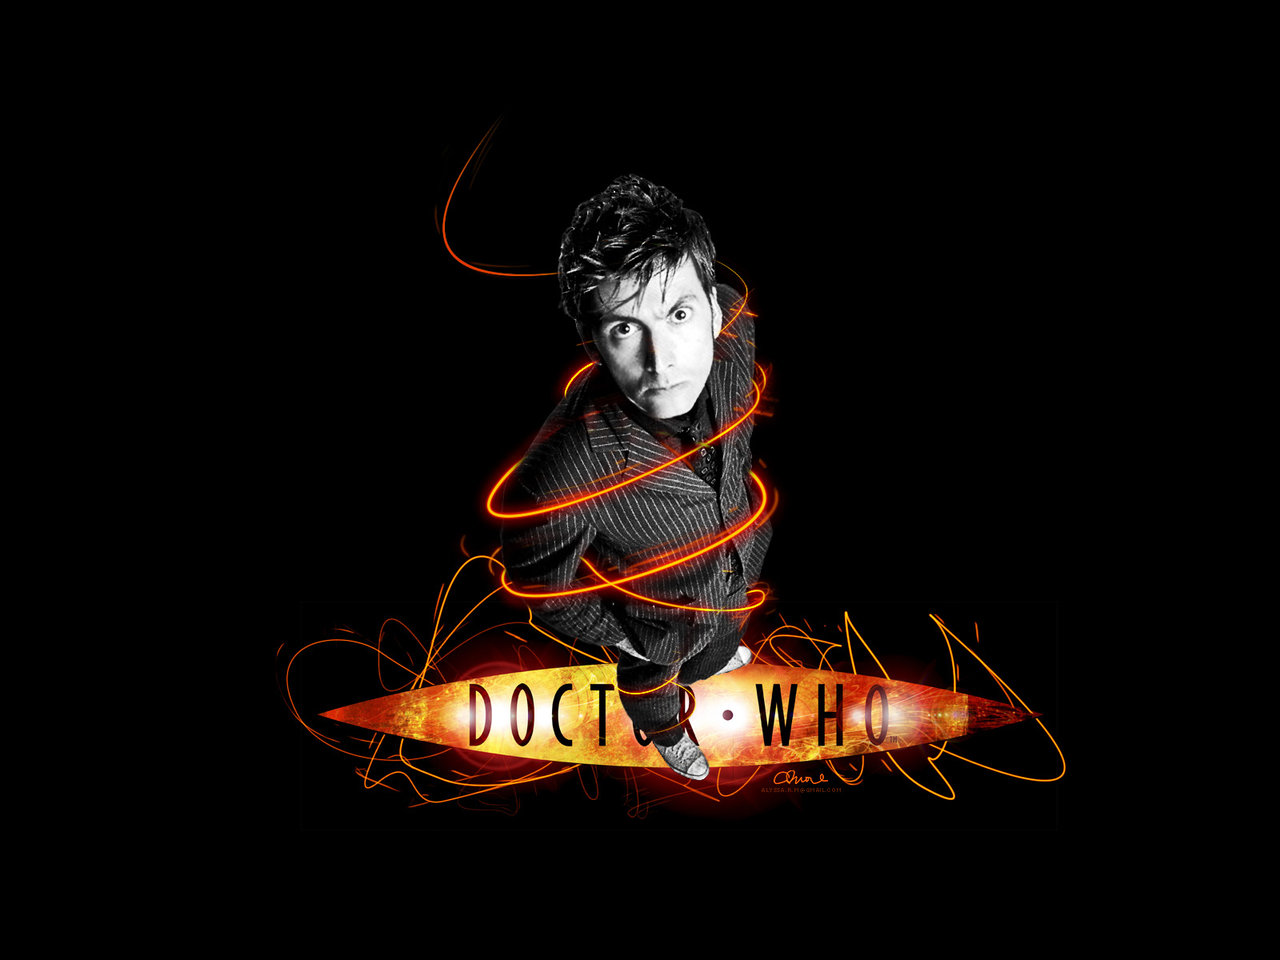 Tenth Doctor Wallpaper By Glarbinator